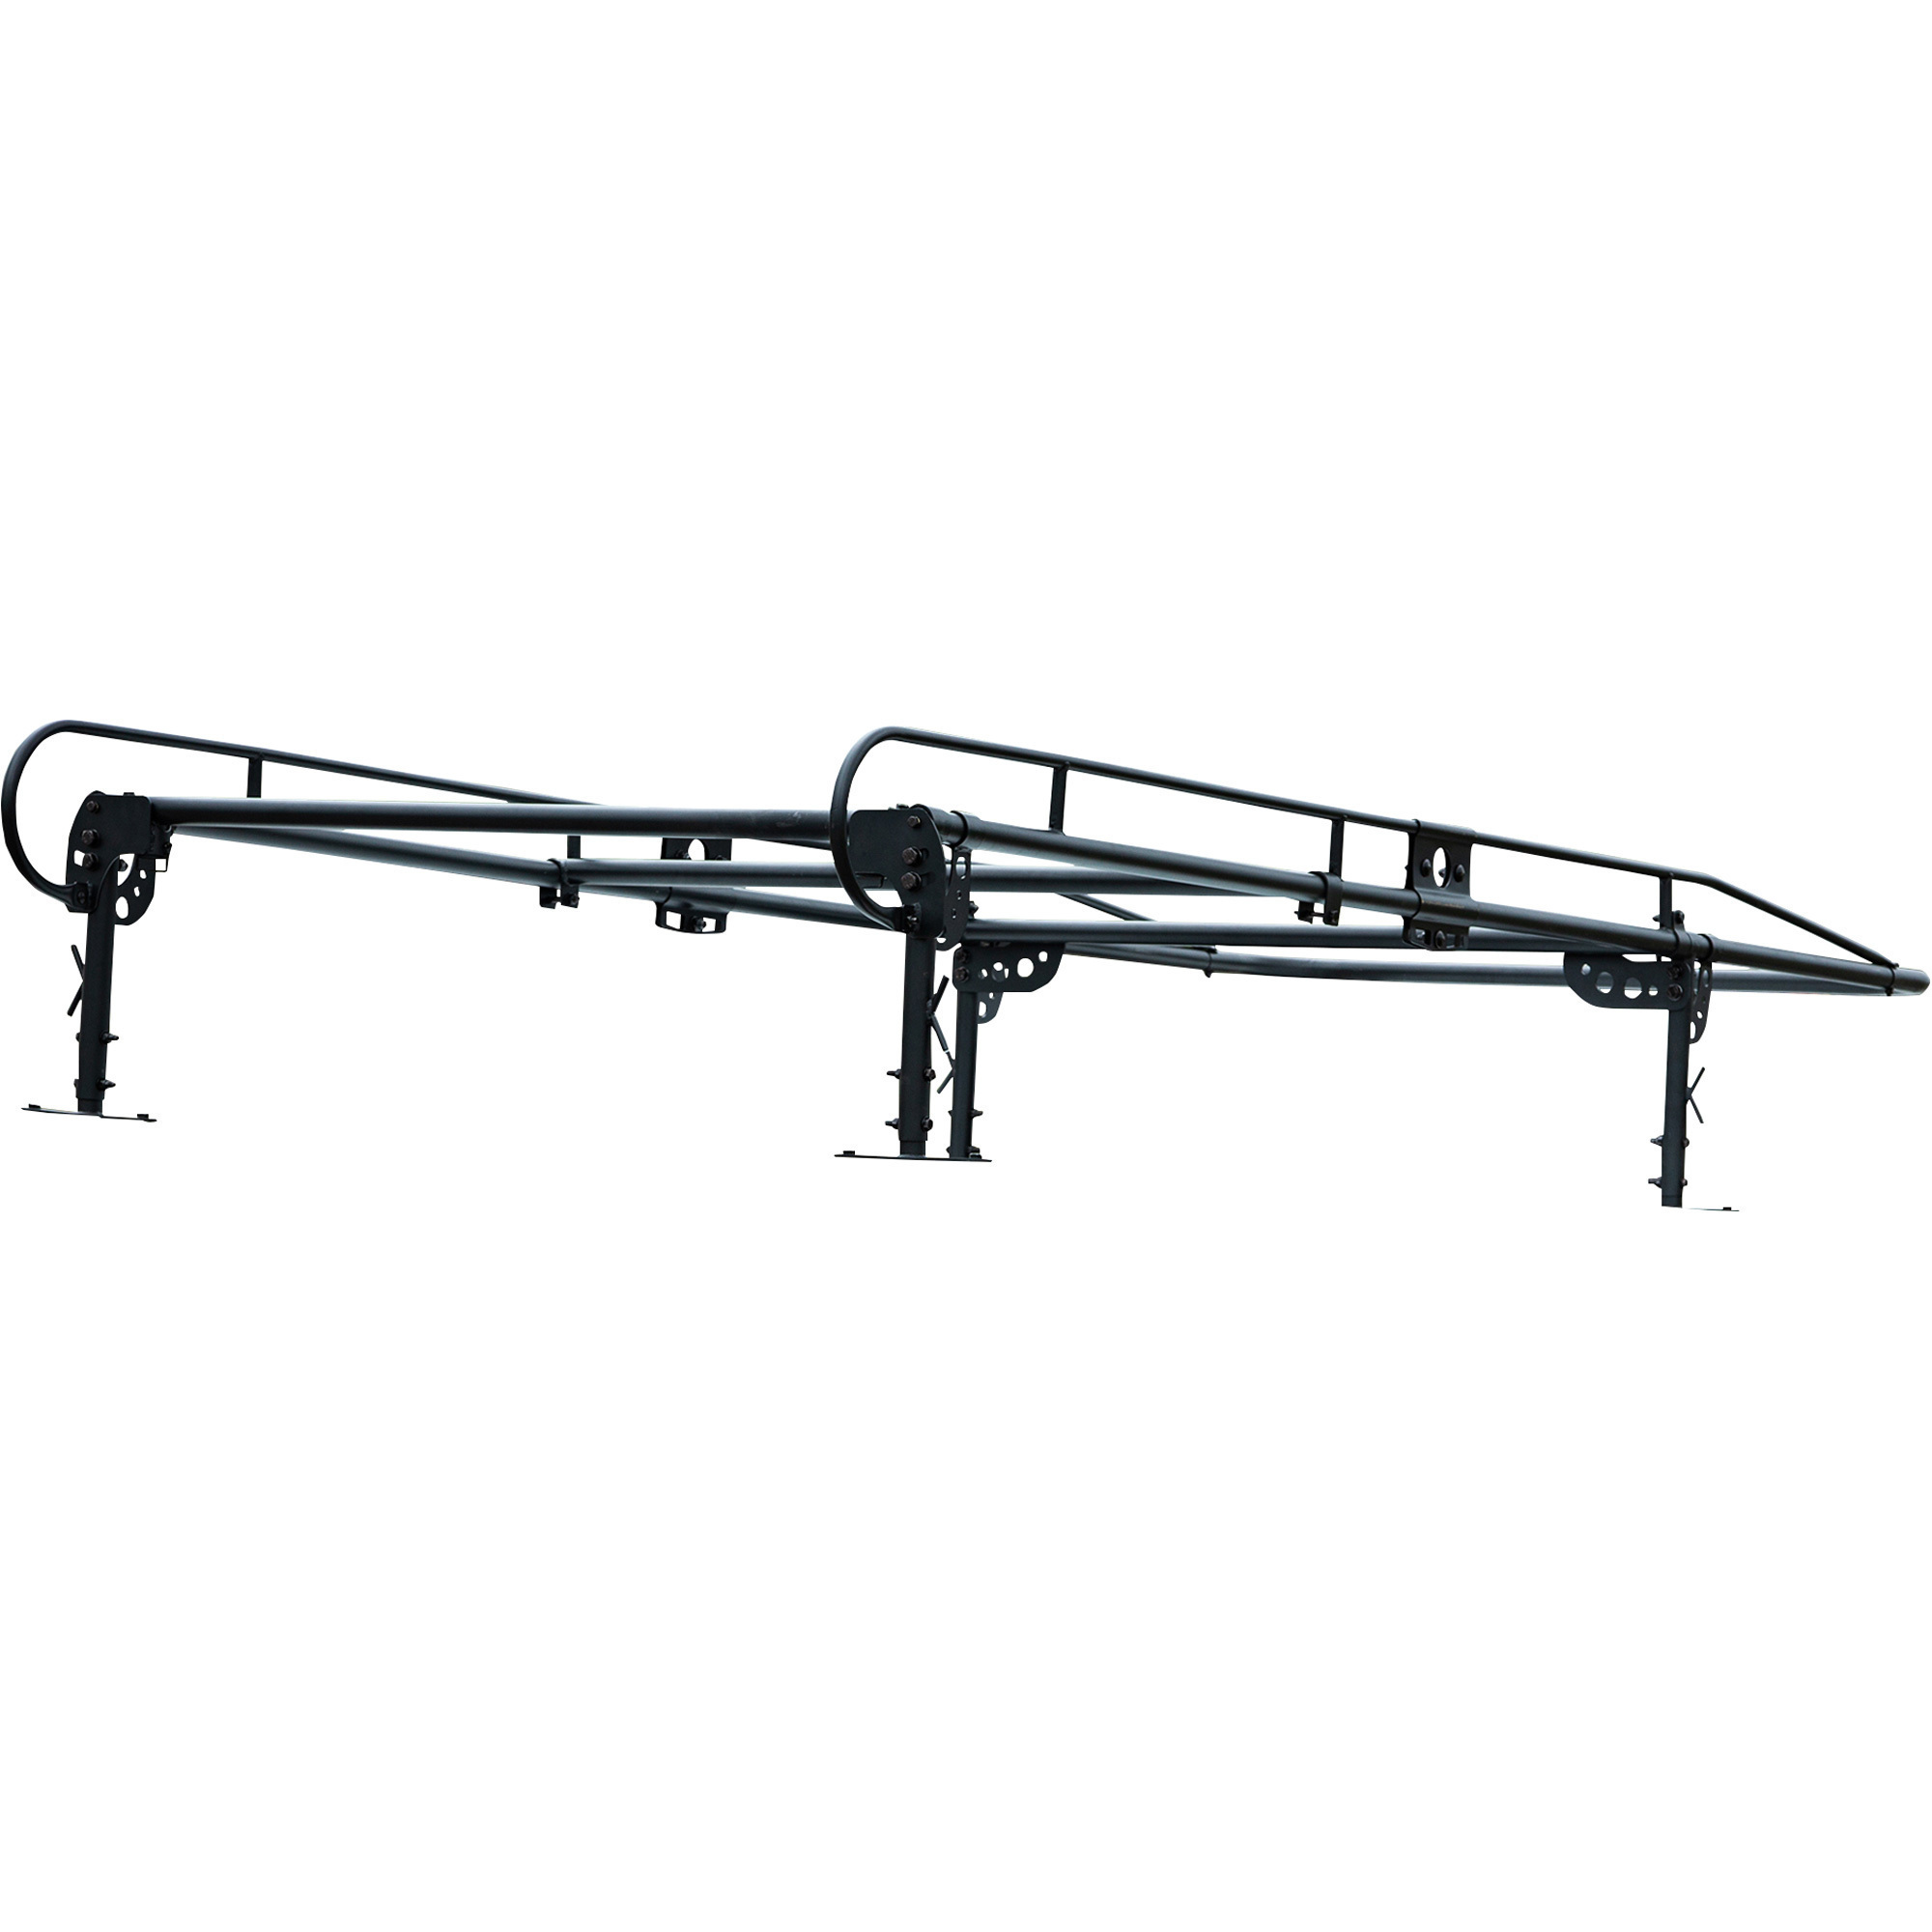 Buyers Products Utility Body Ladder Rack, 162Inch L x 66Inch W x 22Inch H, Model 1501250